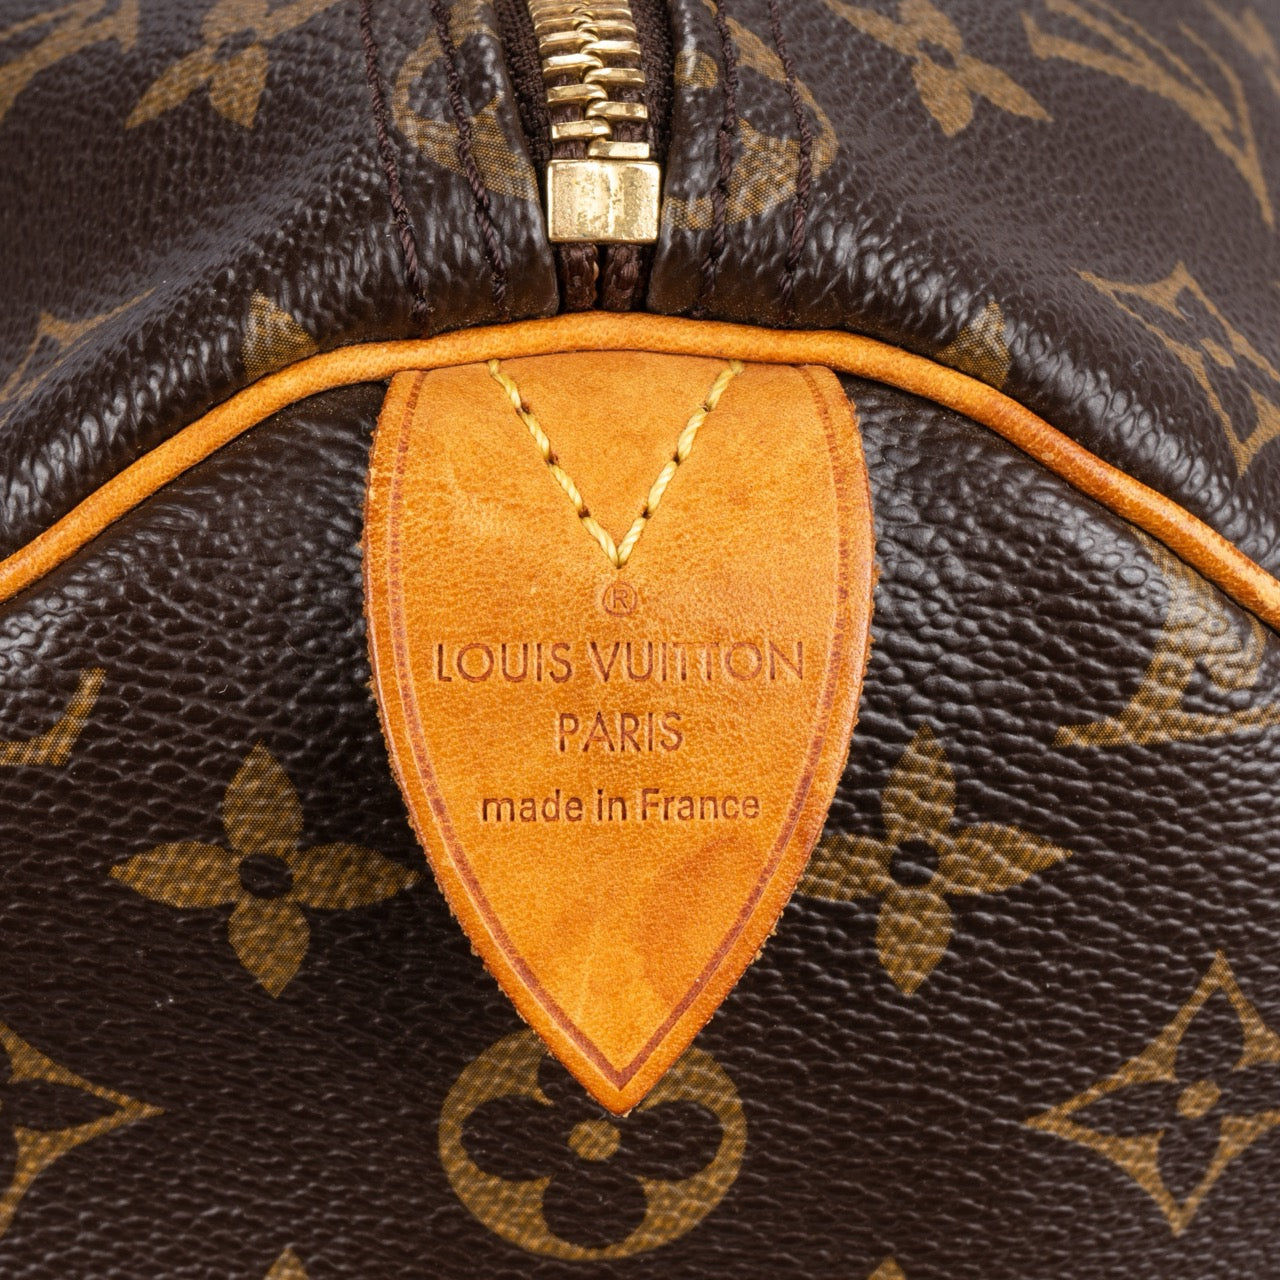 Louis Vuitton Canvas Monogram Speedy 35 Handbag